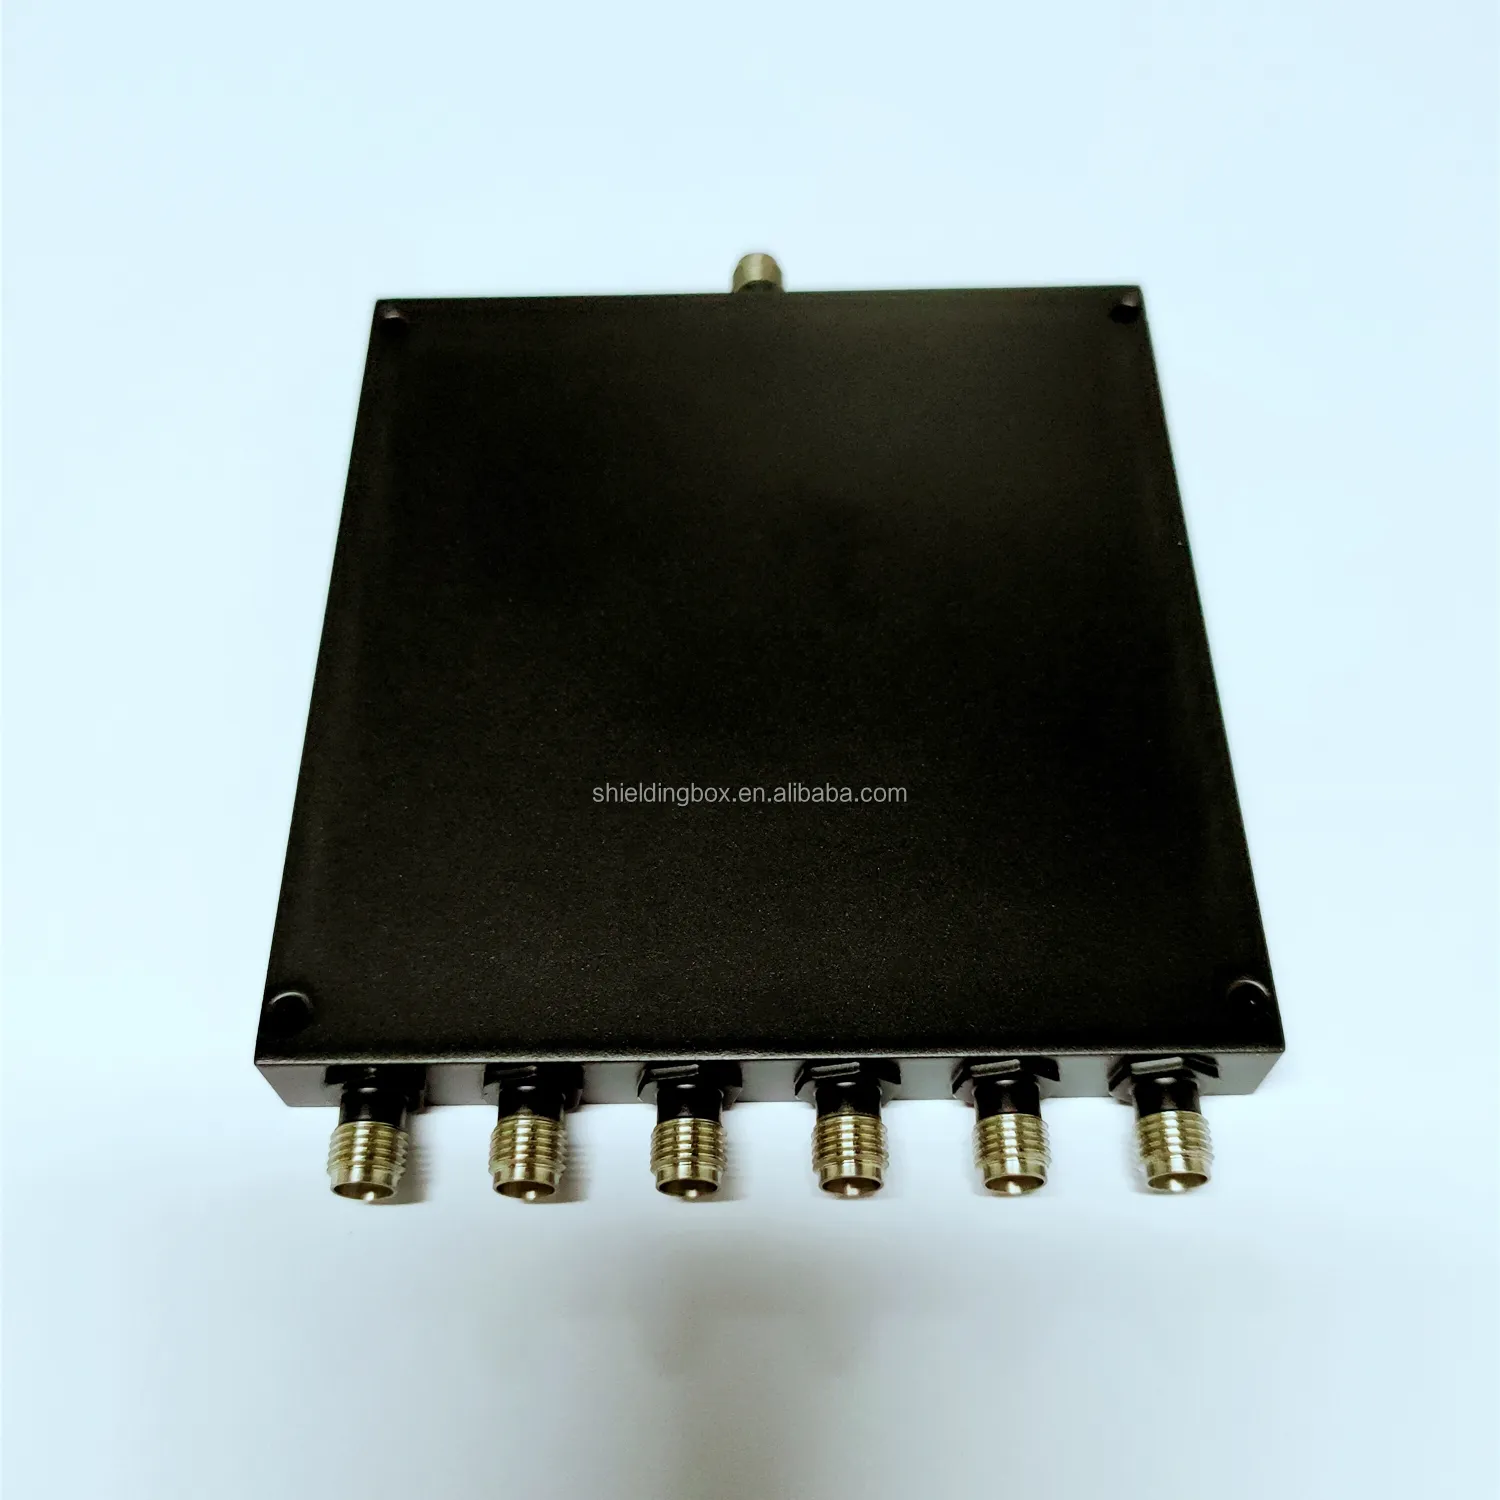 2000-8000MHz 6วิธีตัวเชื่อมต่อ SMA แบบพาสซีฟสำหรับตัวแยกไฟทดสอบ5g/6g/WiFi